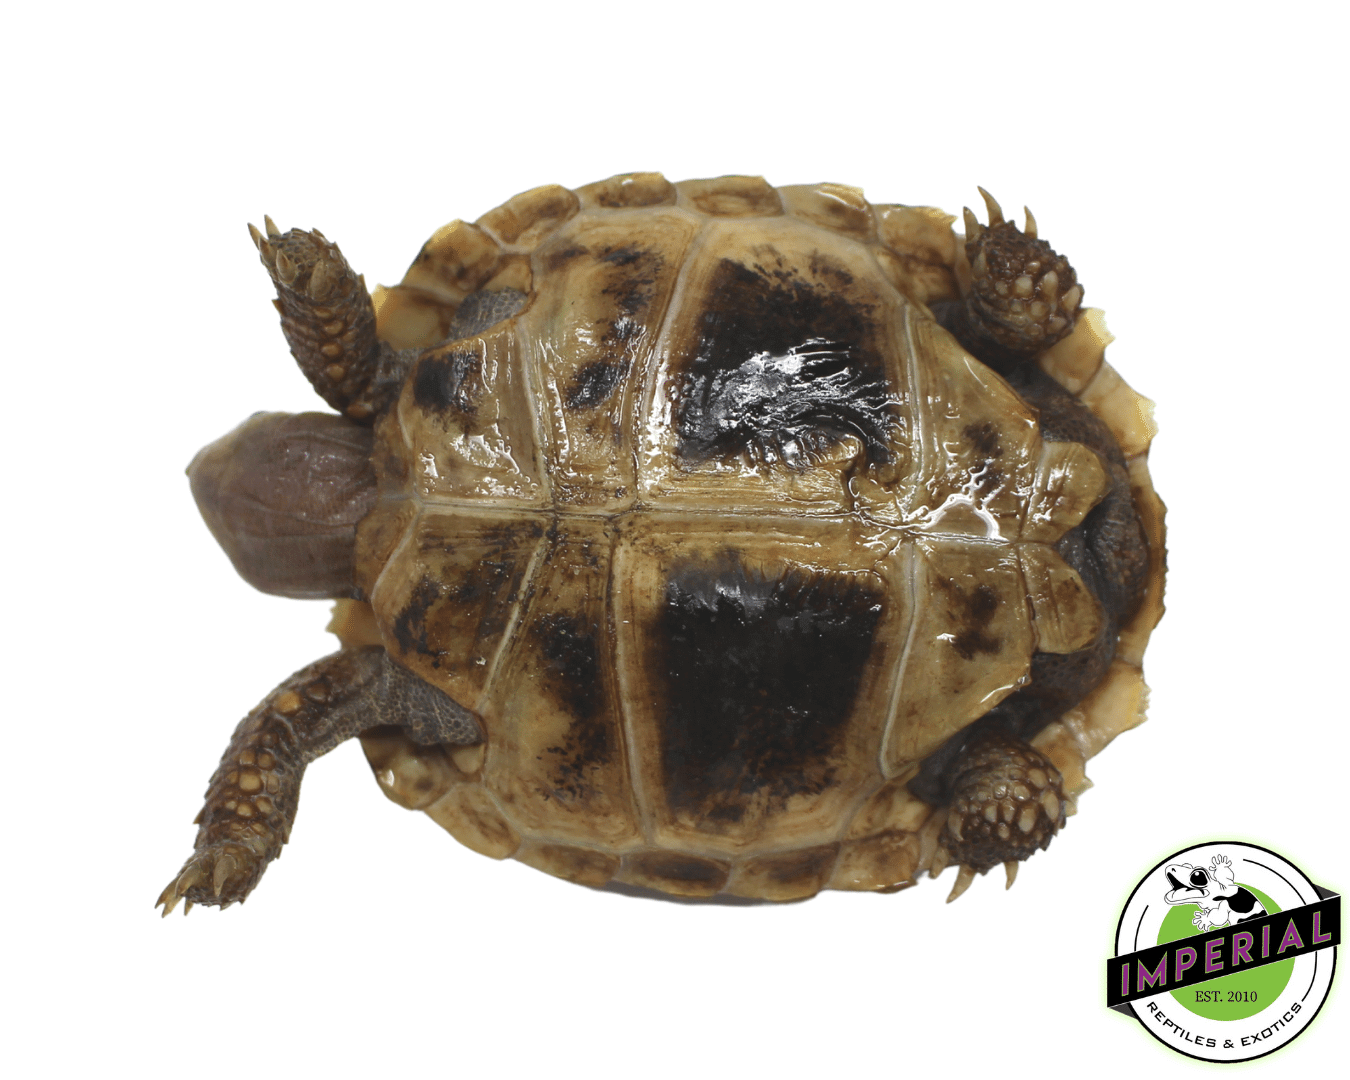 elongated x travencore tortoise for sale online, buy cheap tortoises near me